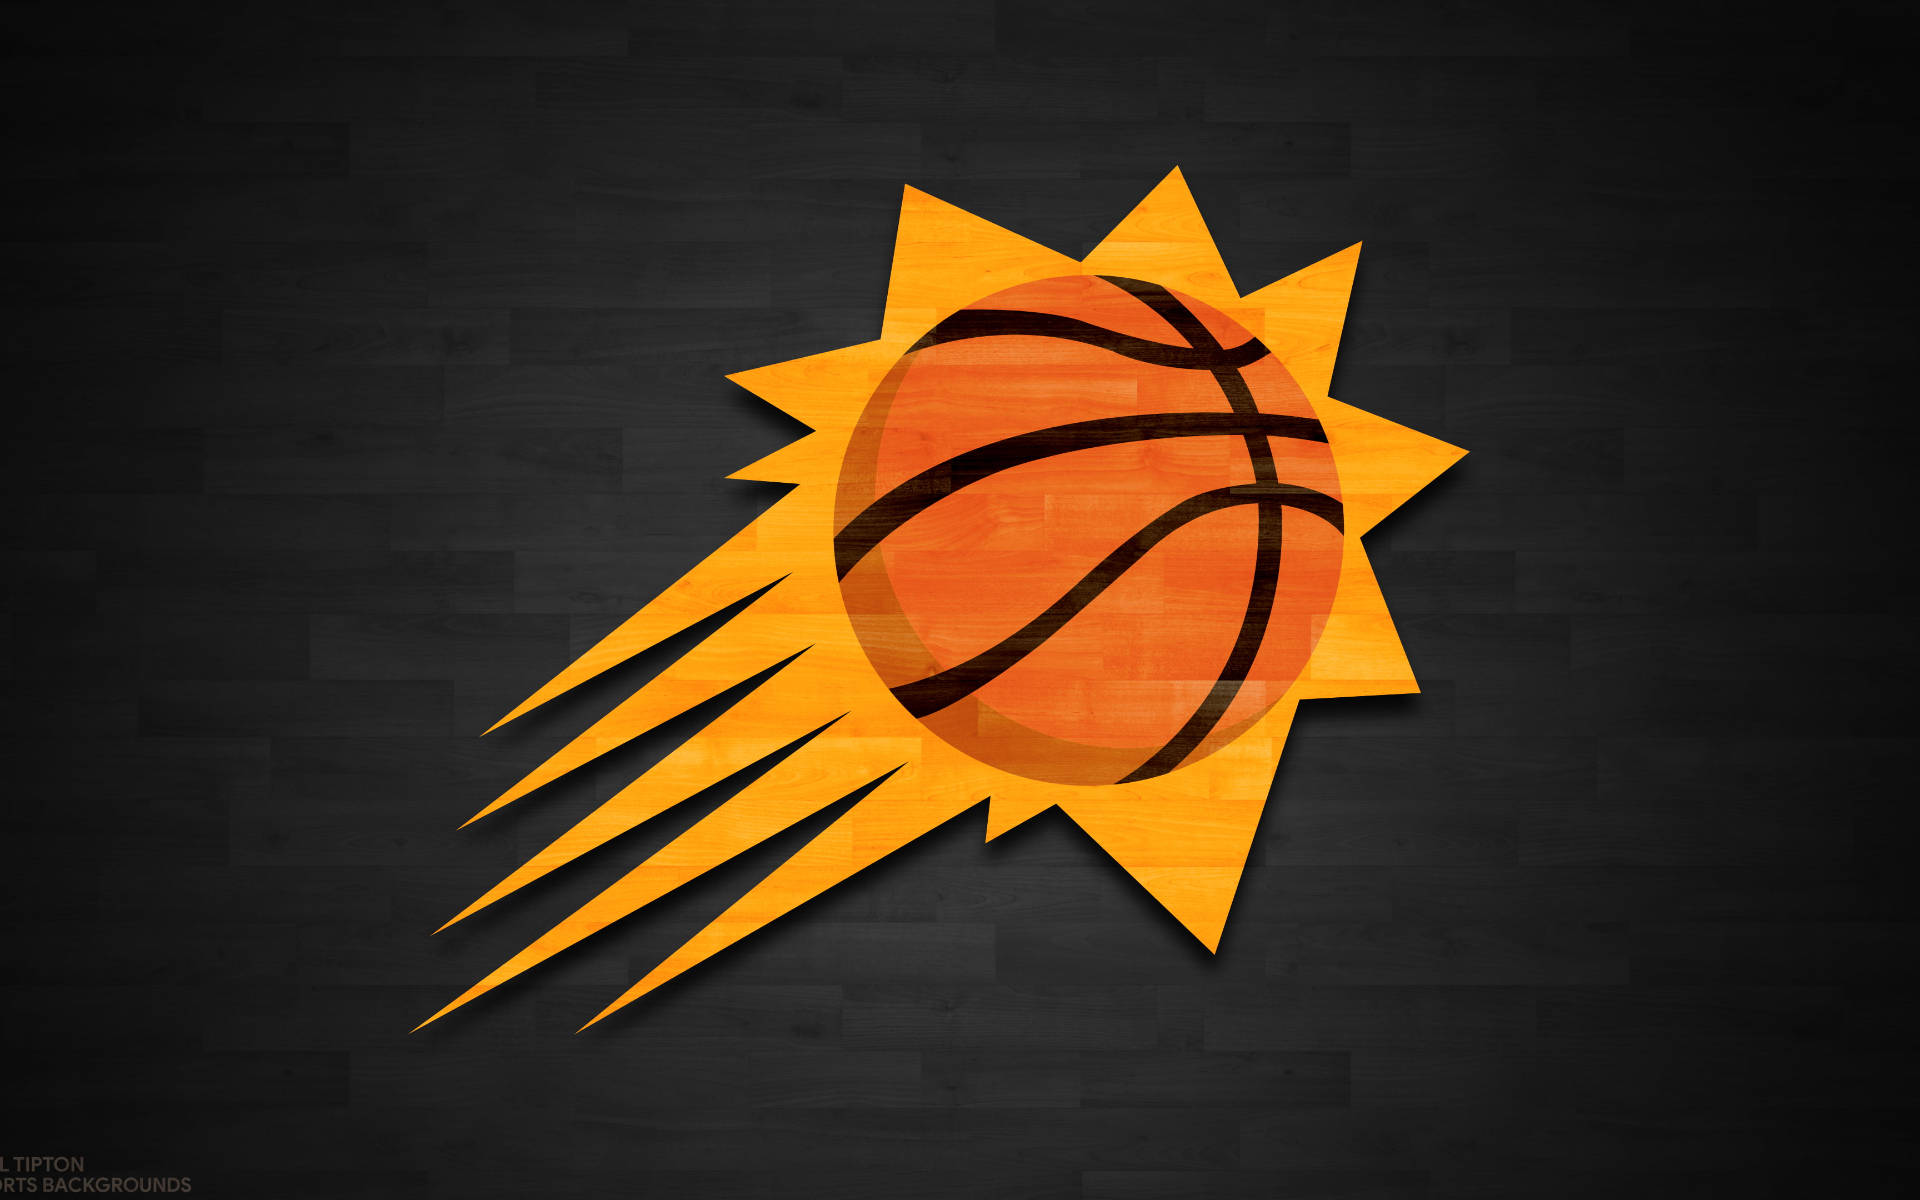 Phoenix Suns Team In Action Wallpaper